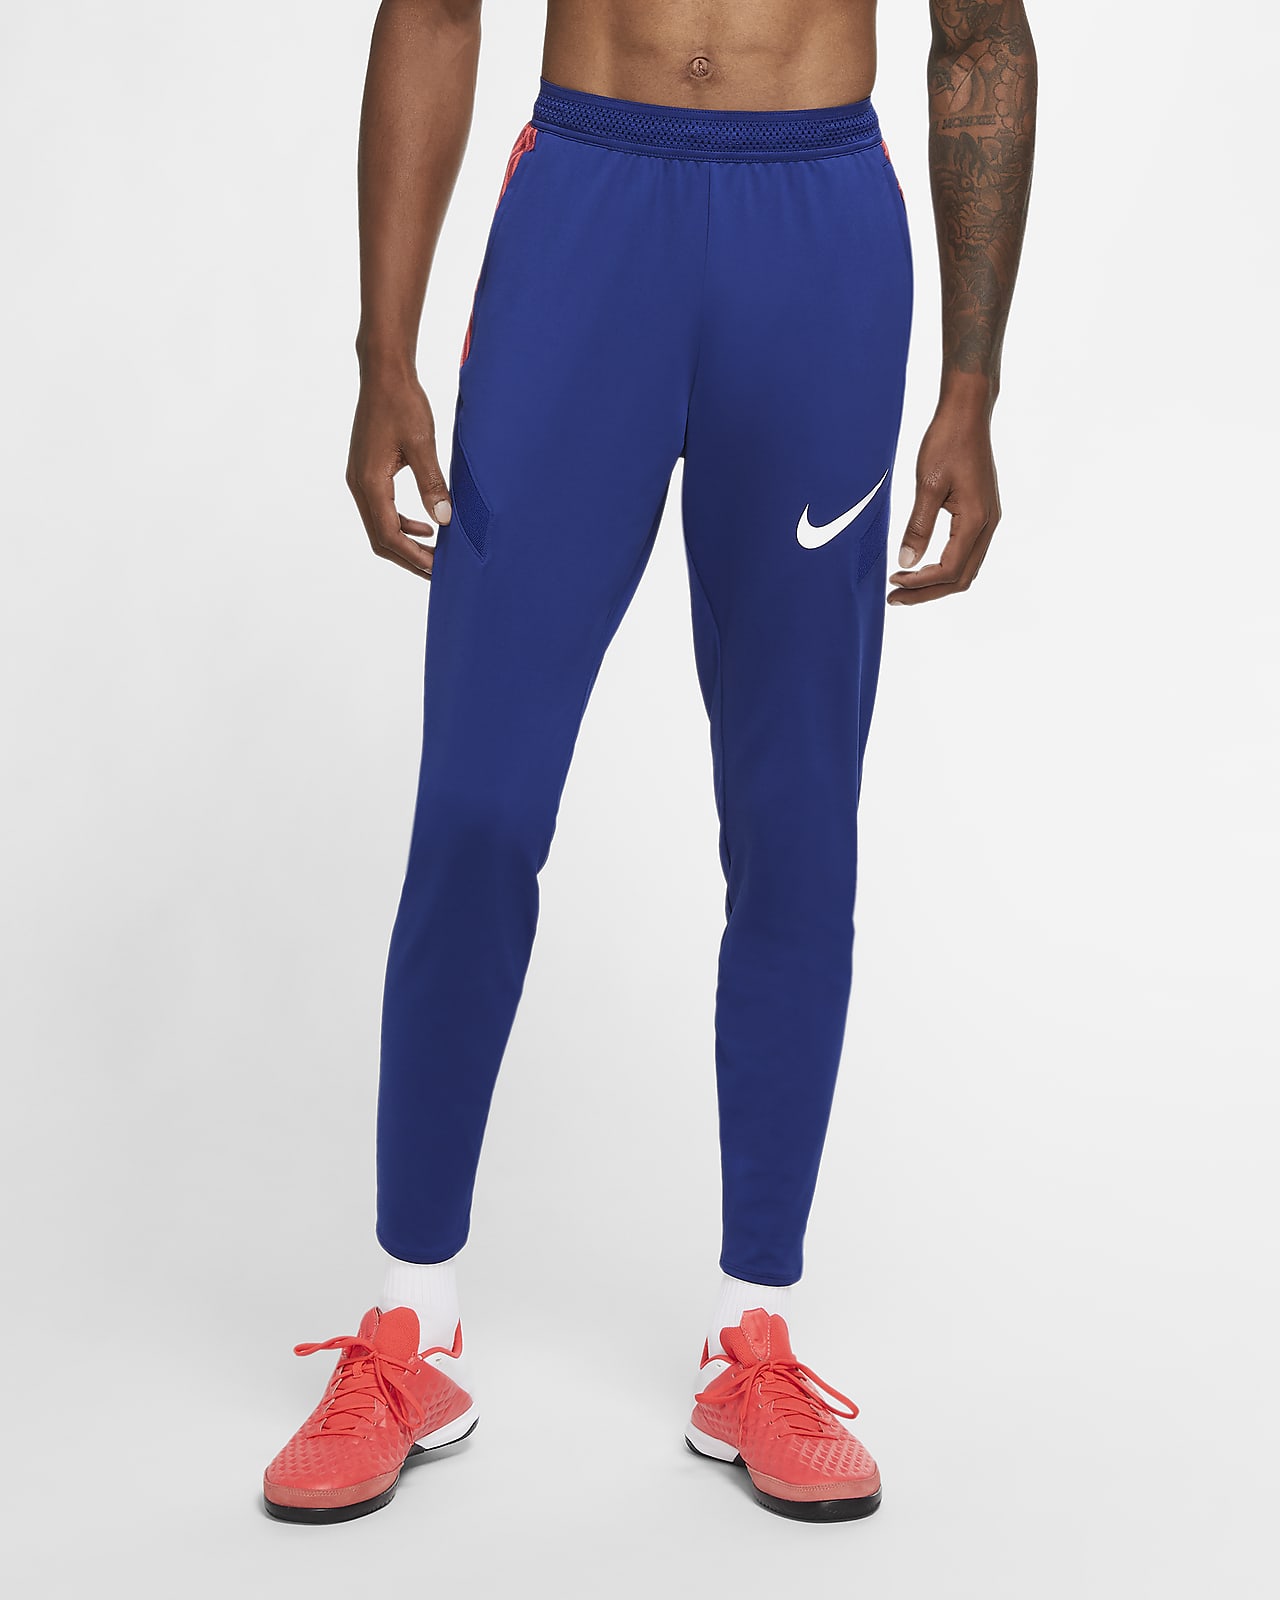 Nike Blue Track Pants  Buy Nike Blue Track Pants online in India